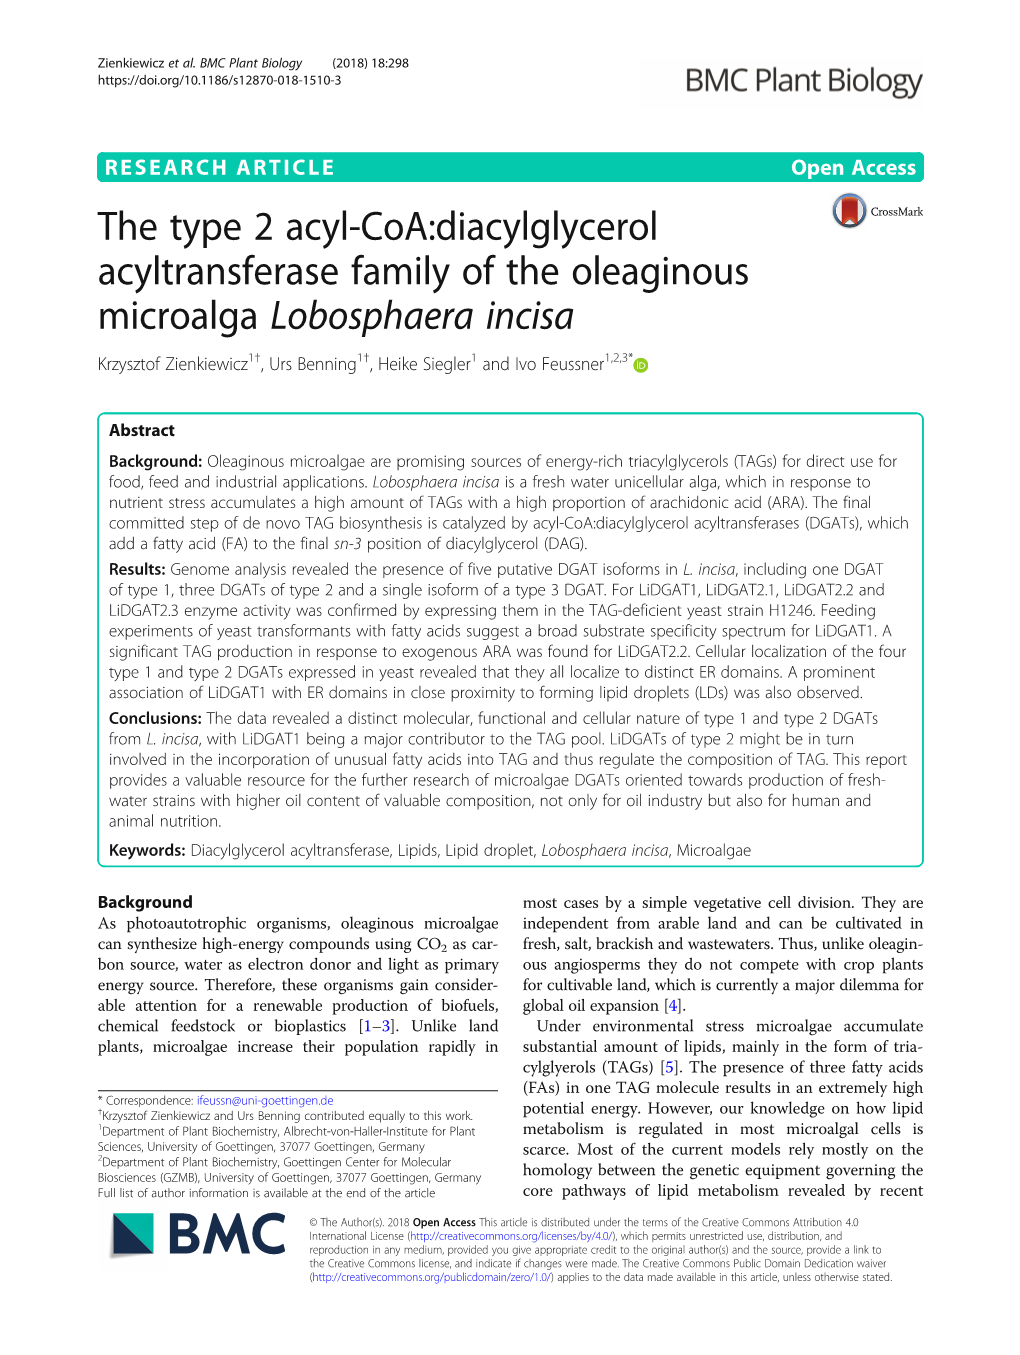 The Type 2 Acyl-Coa:Diacylglycerol Acyltransferase Family of the Oleaginous Microalga Lobosphaera Incisa